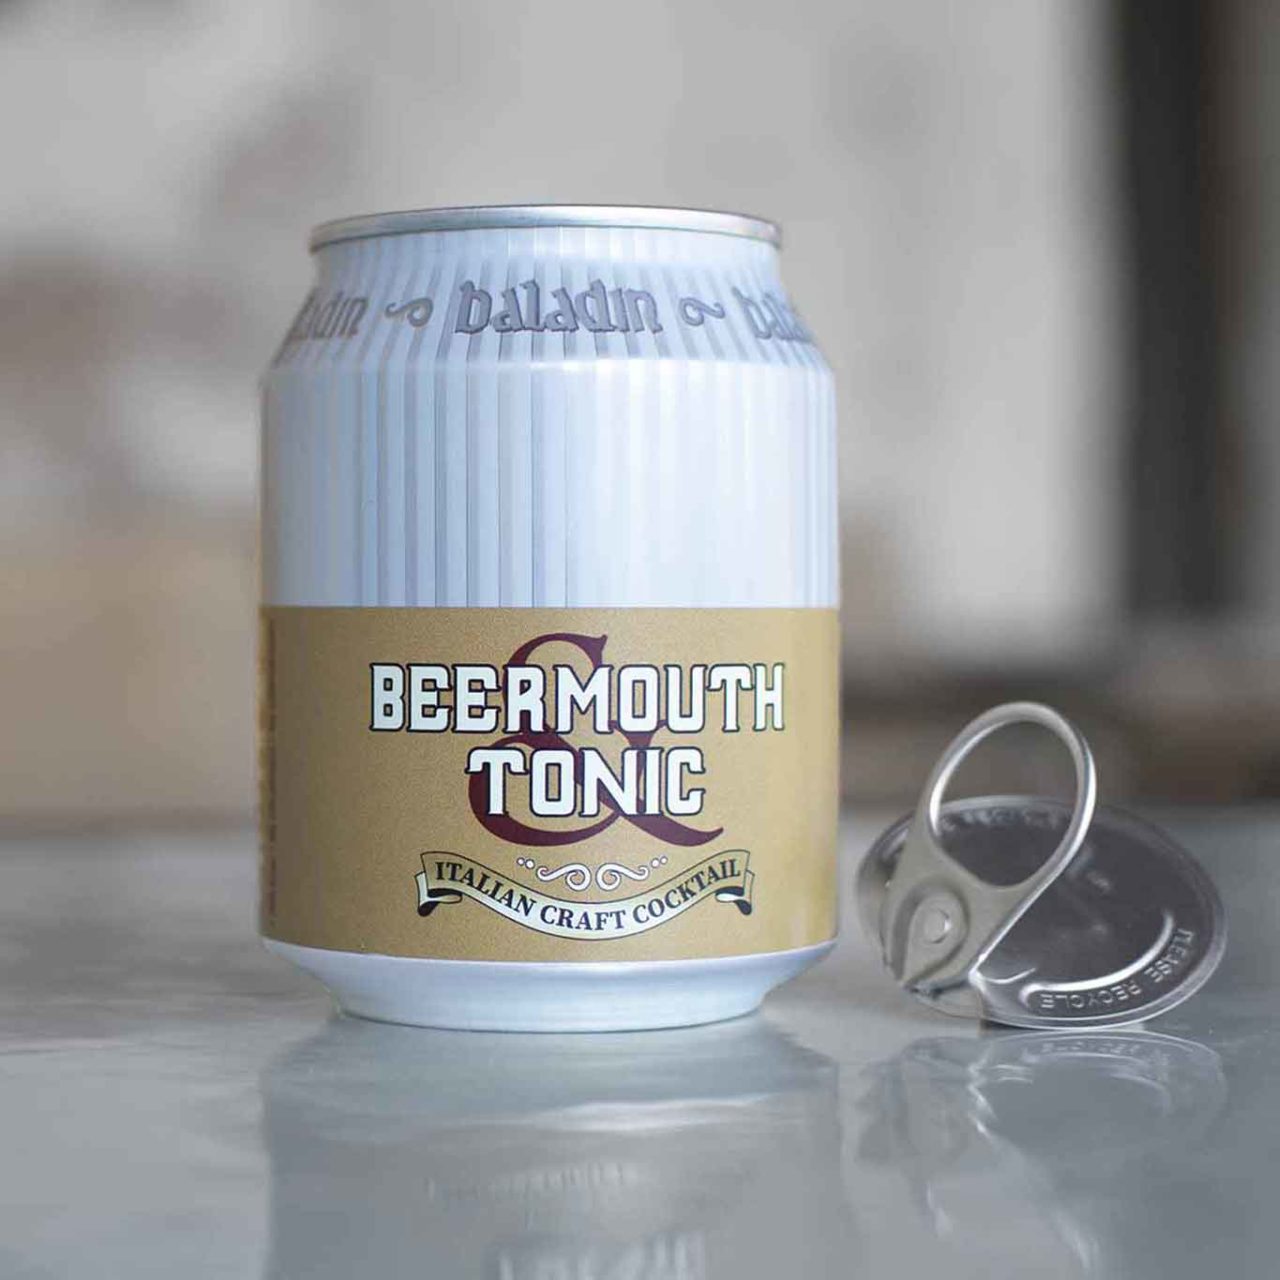 Baladin beermouth tonic